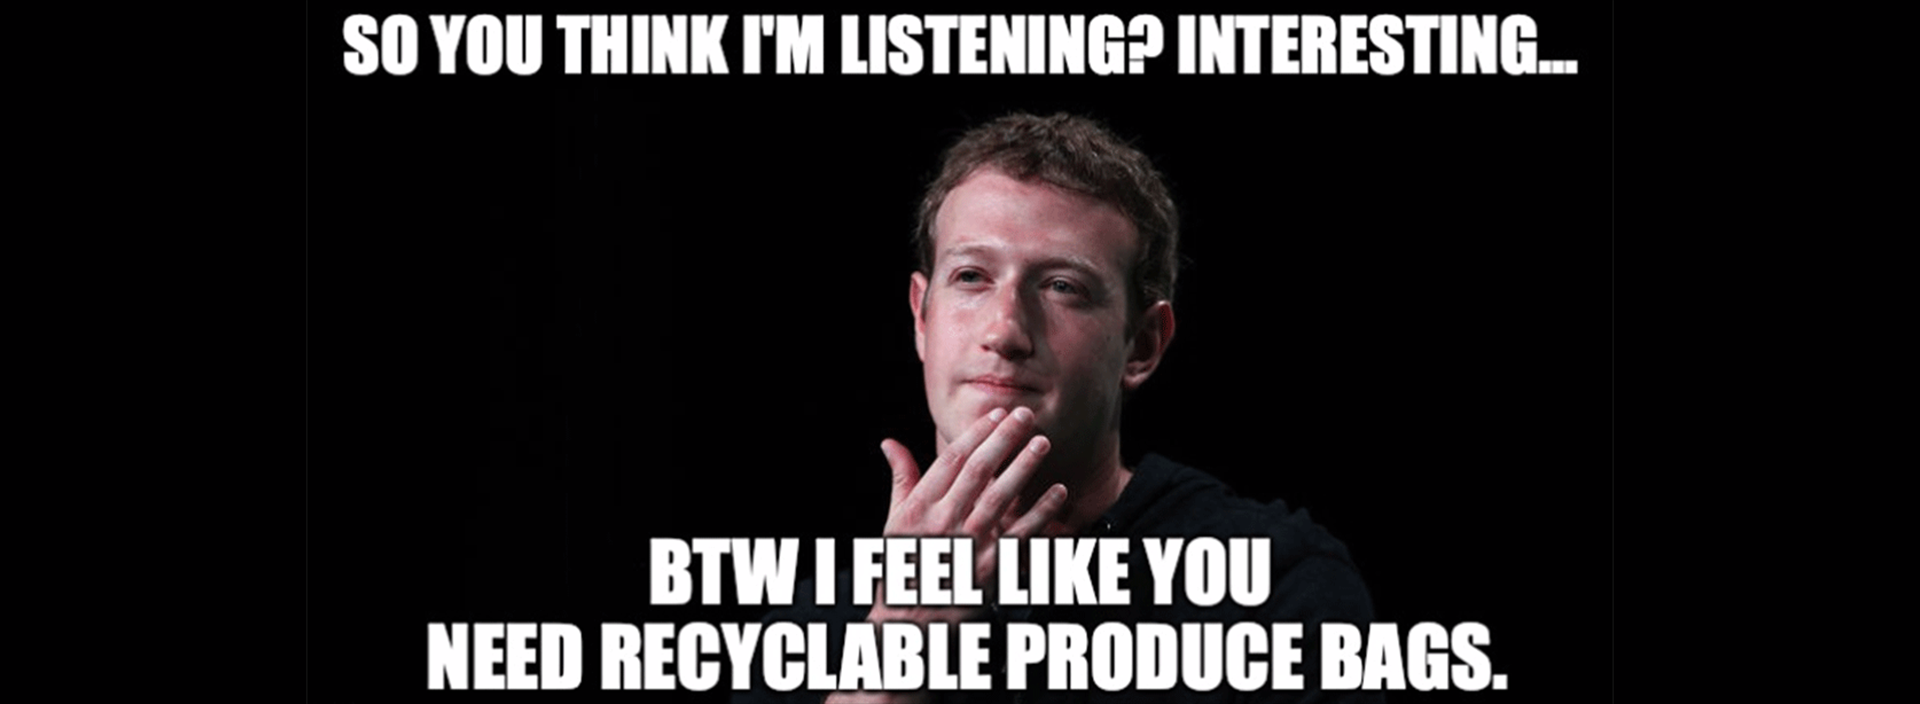 facebook is listening